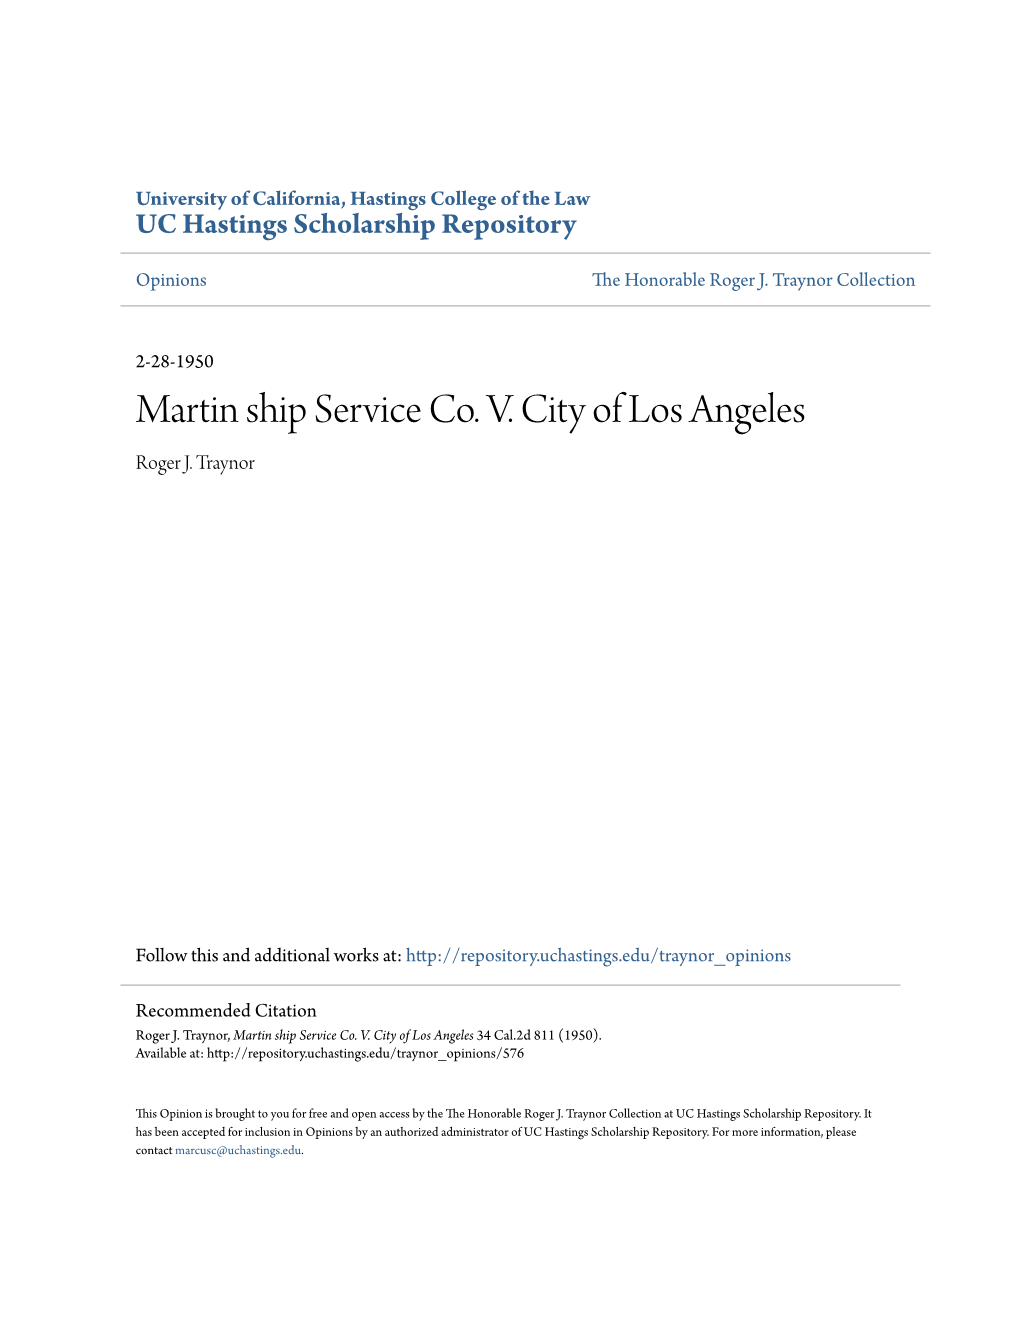 Martin Ship Service Co. V. City of Los Angeles Roger J